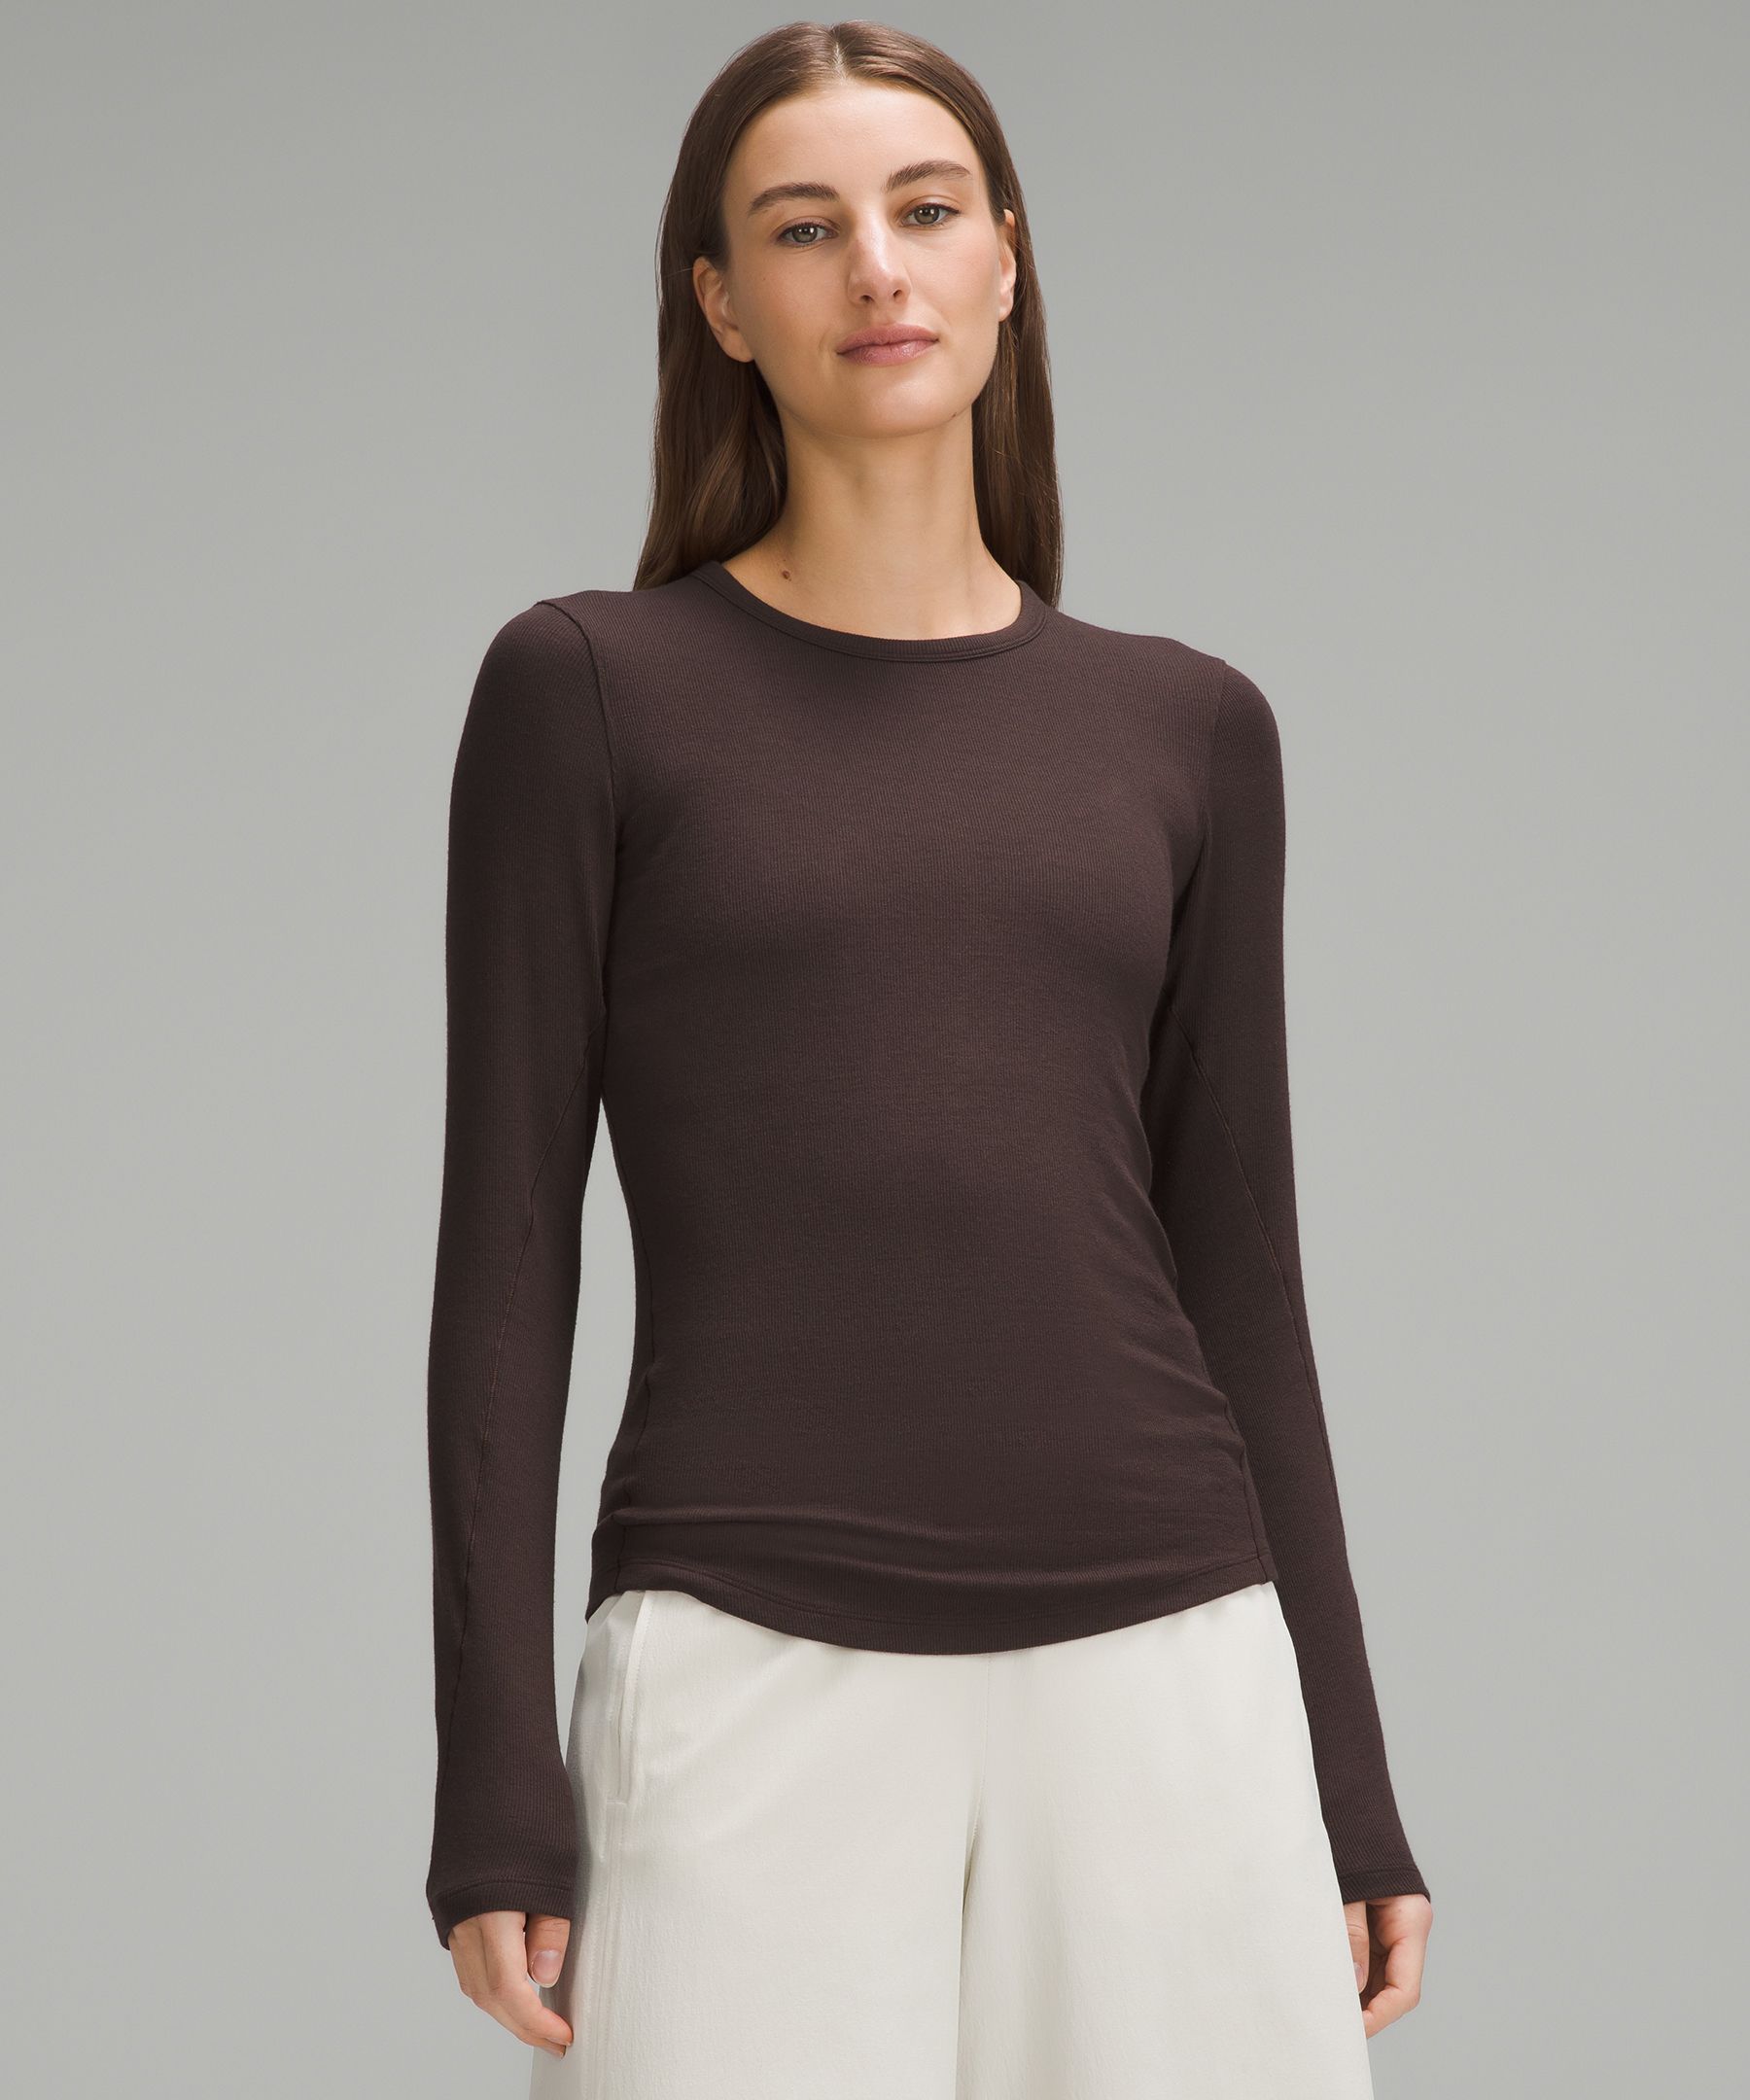 Hold Tight Long-Sleeve Shirt | Women's Long Sleeve Shirts | lululemon